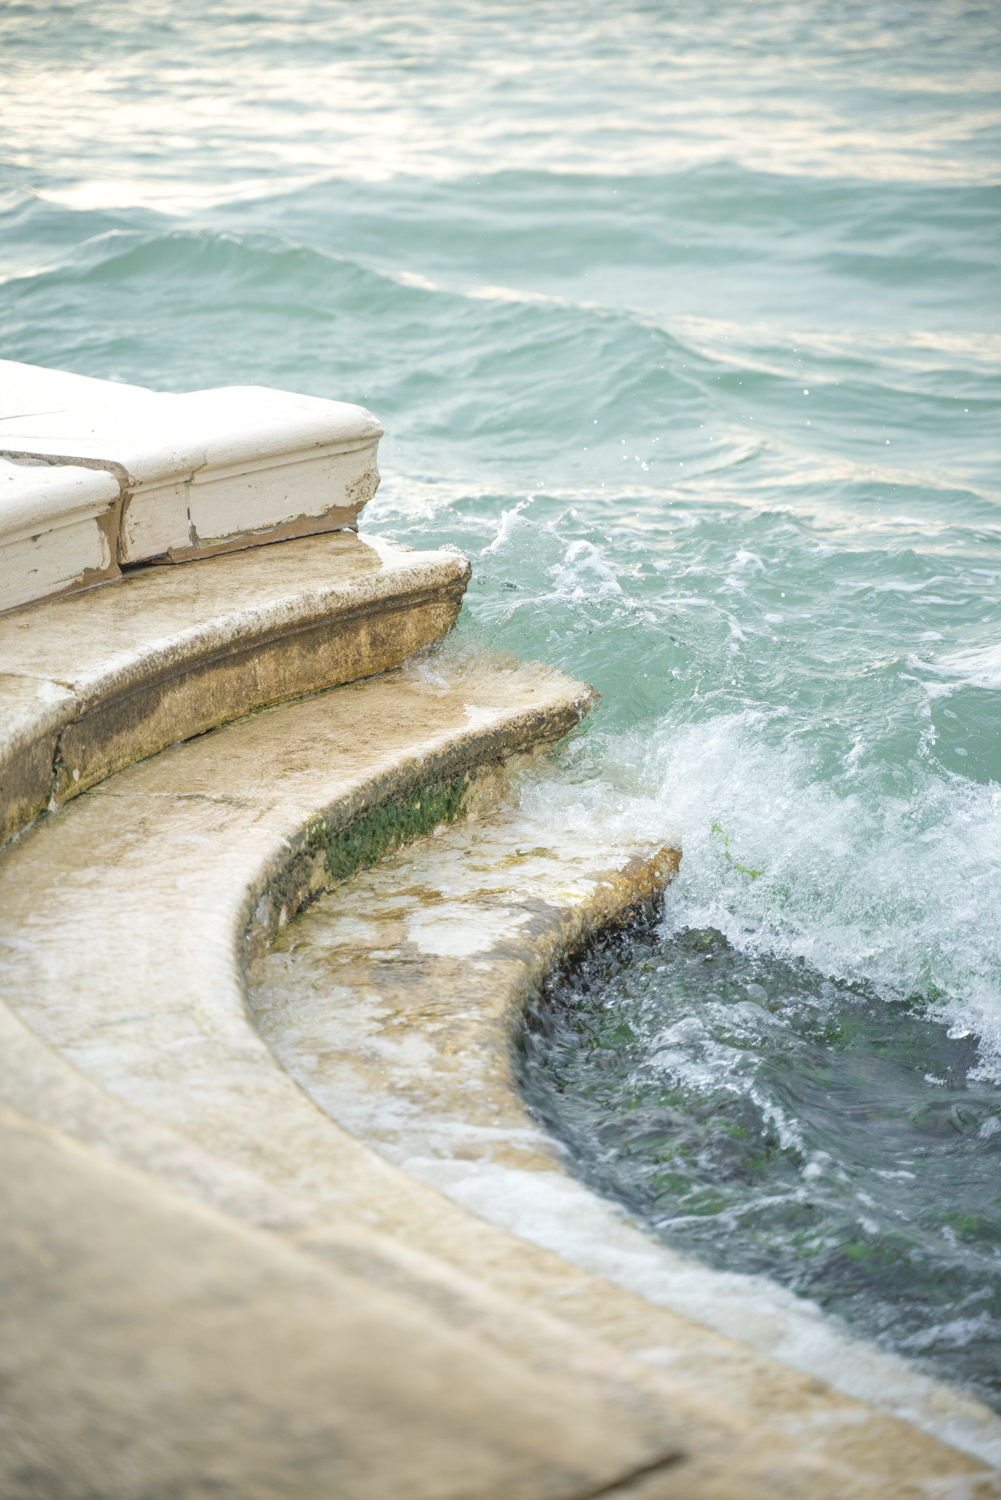 Waves crashing on steps